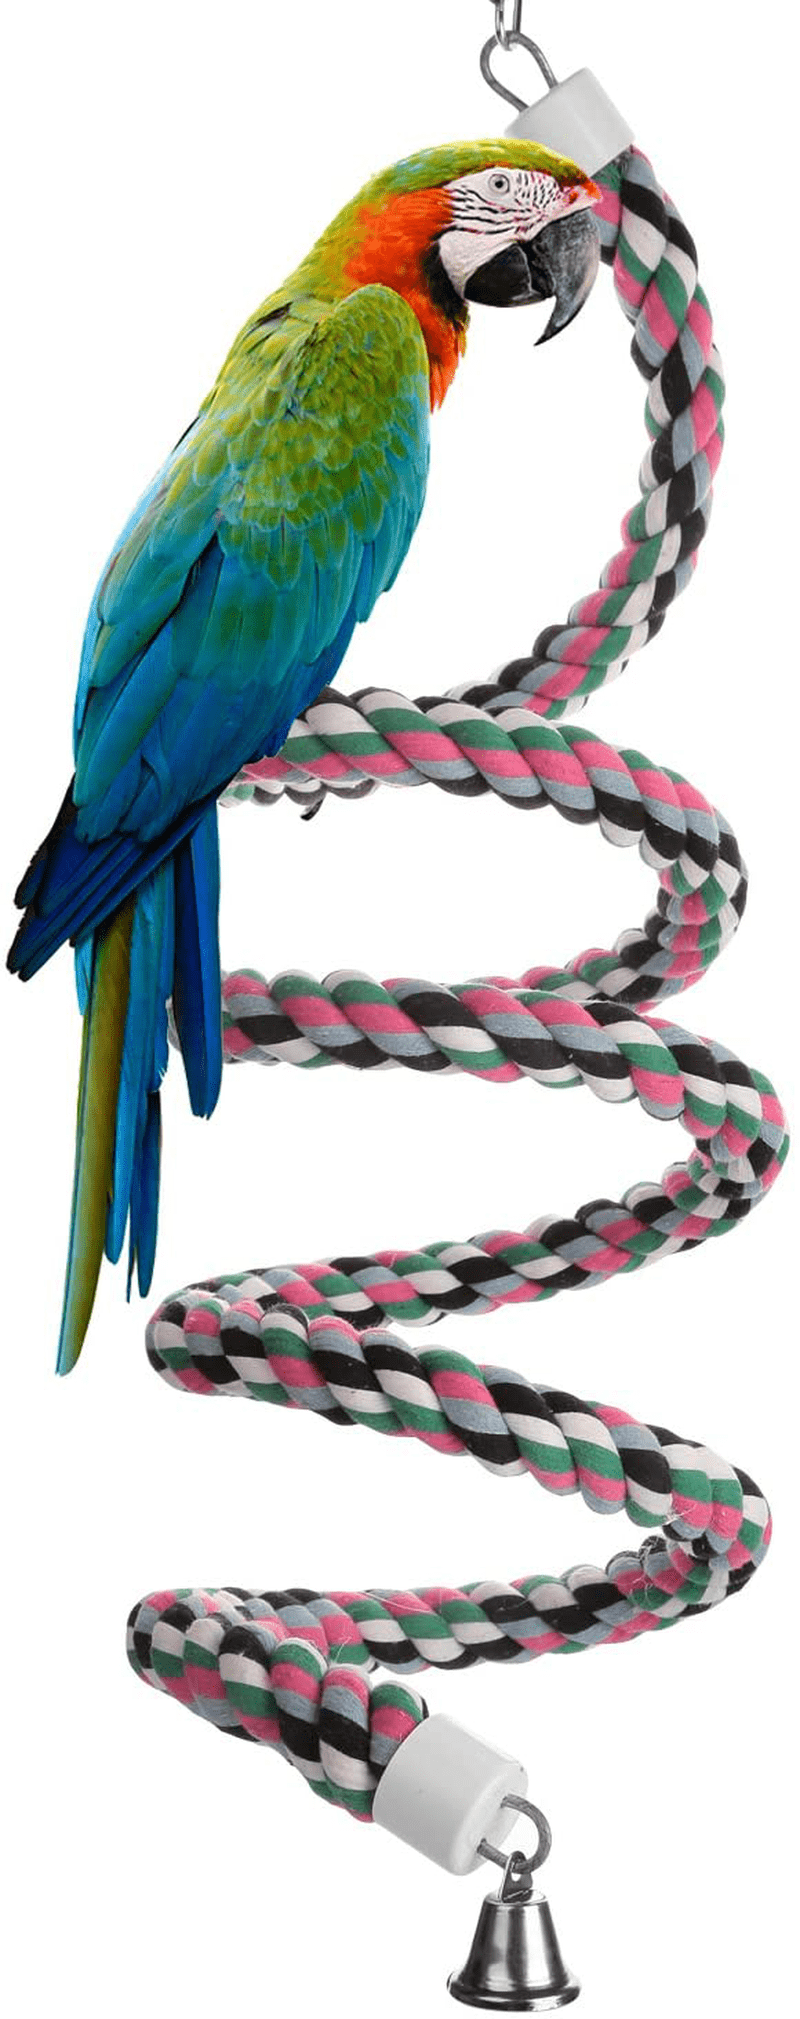 Aigou Bird Spiral Rope Perch, Cotton Parrot Swing Climbing Standing Toys with Bell